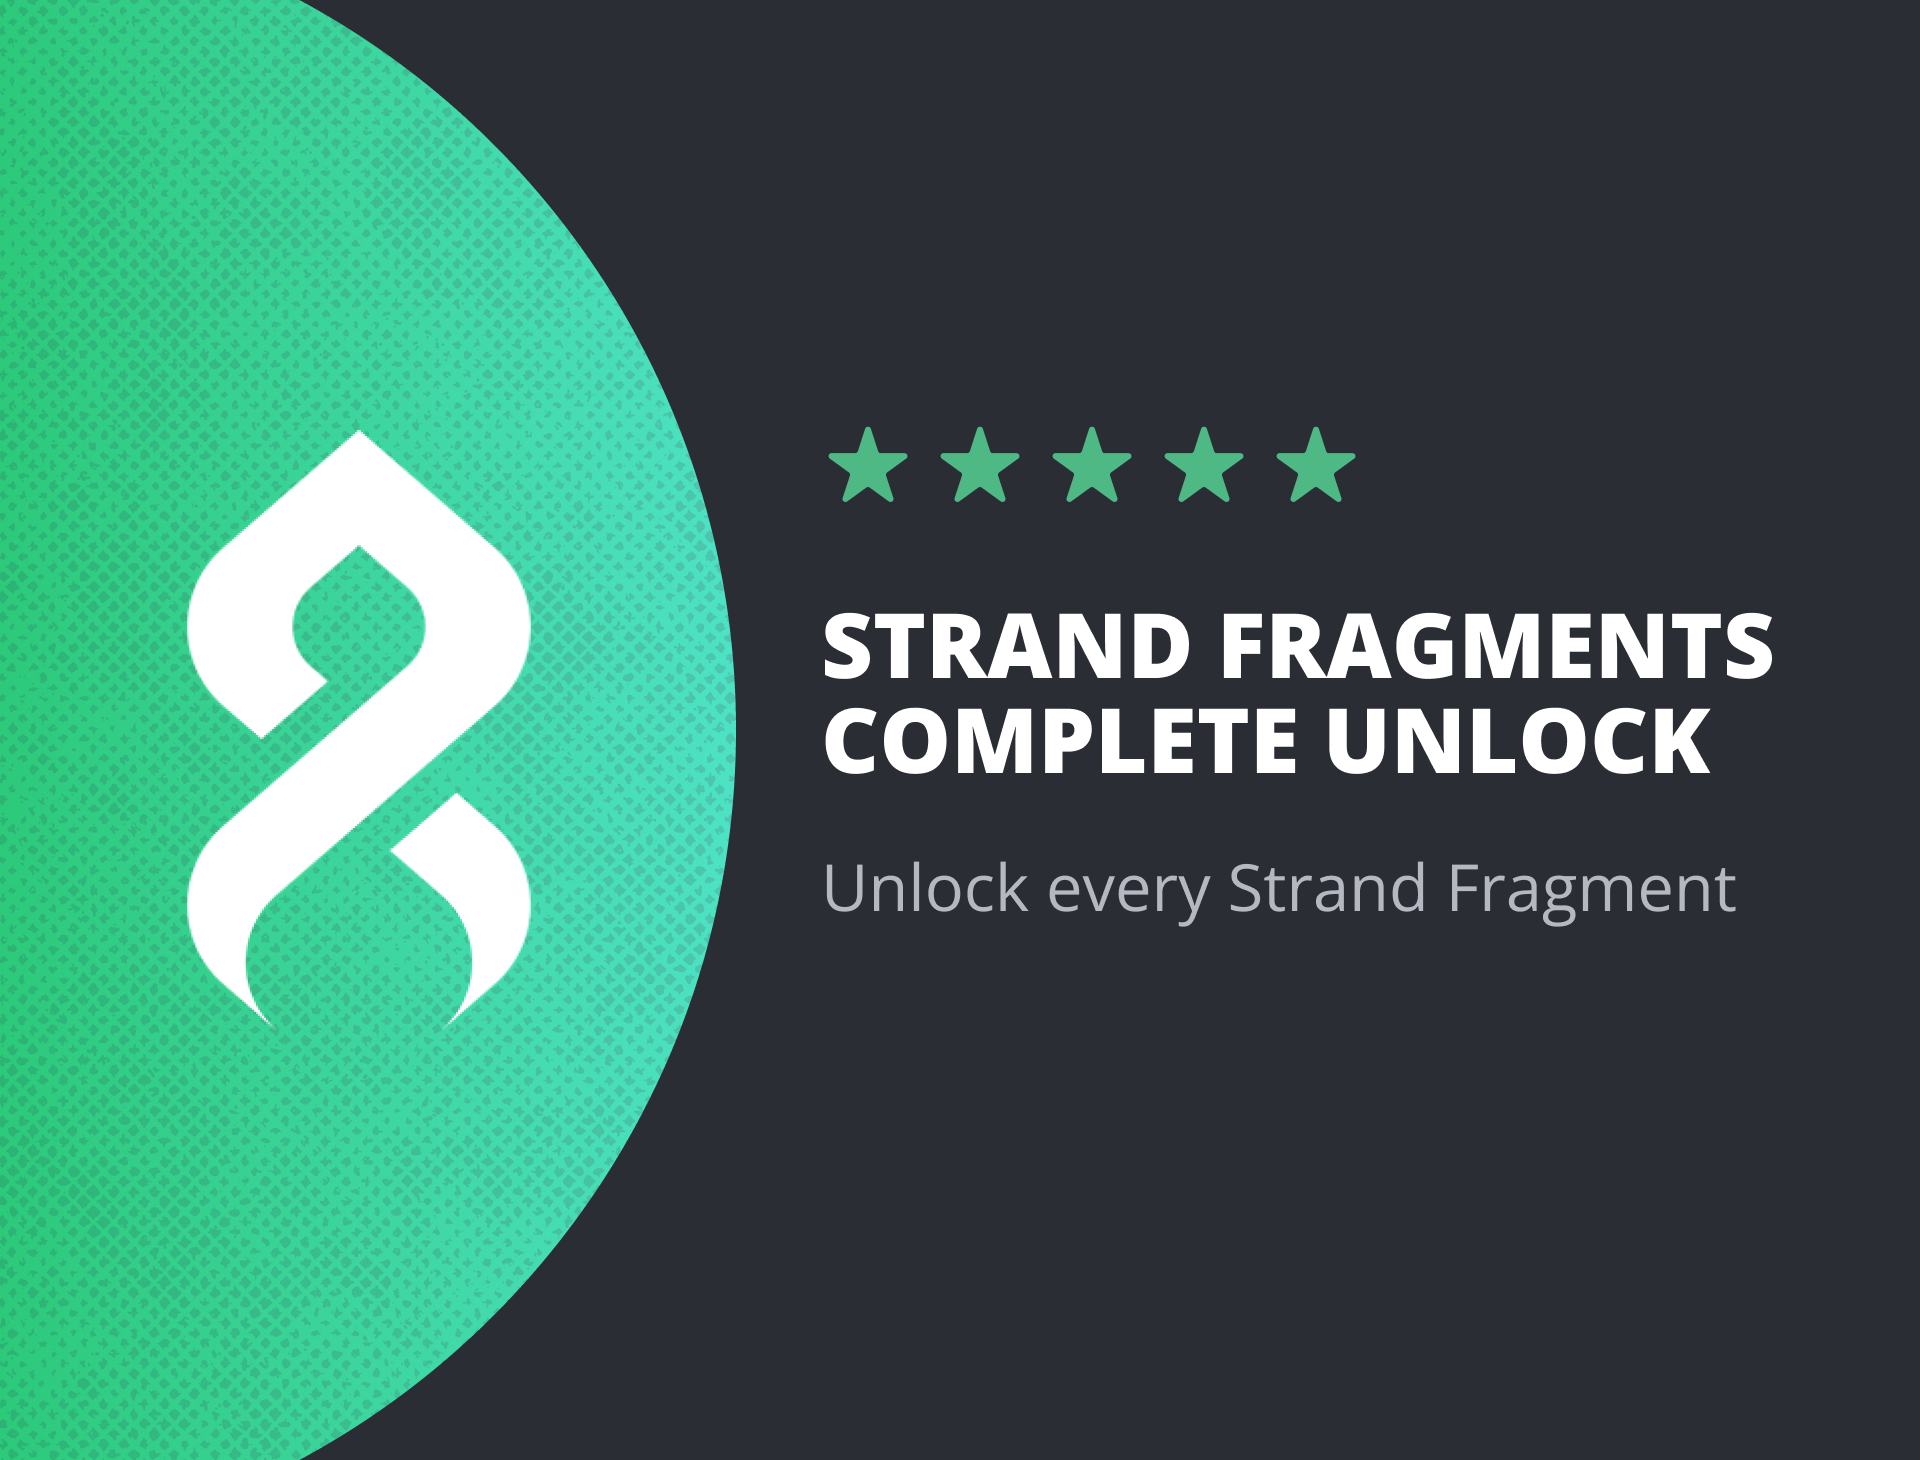 Full Strand Fragments Unlock Service